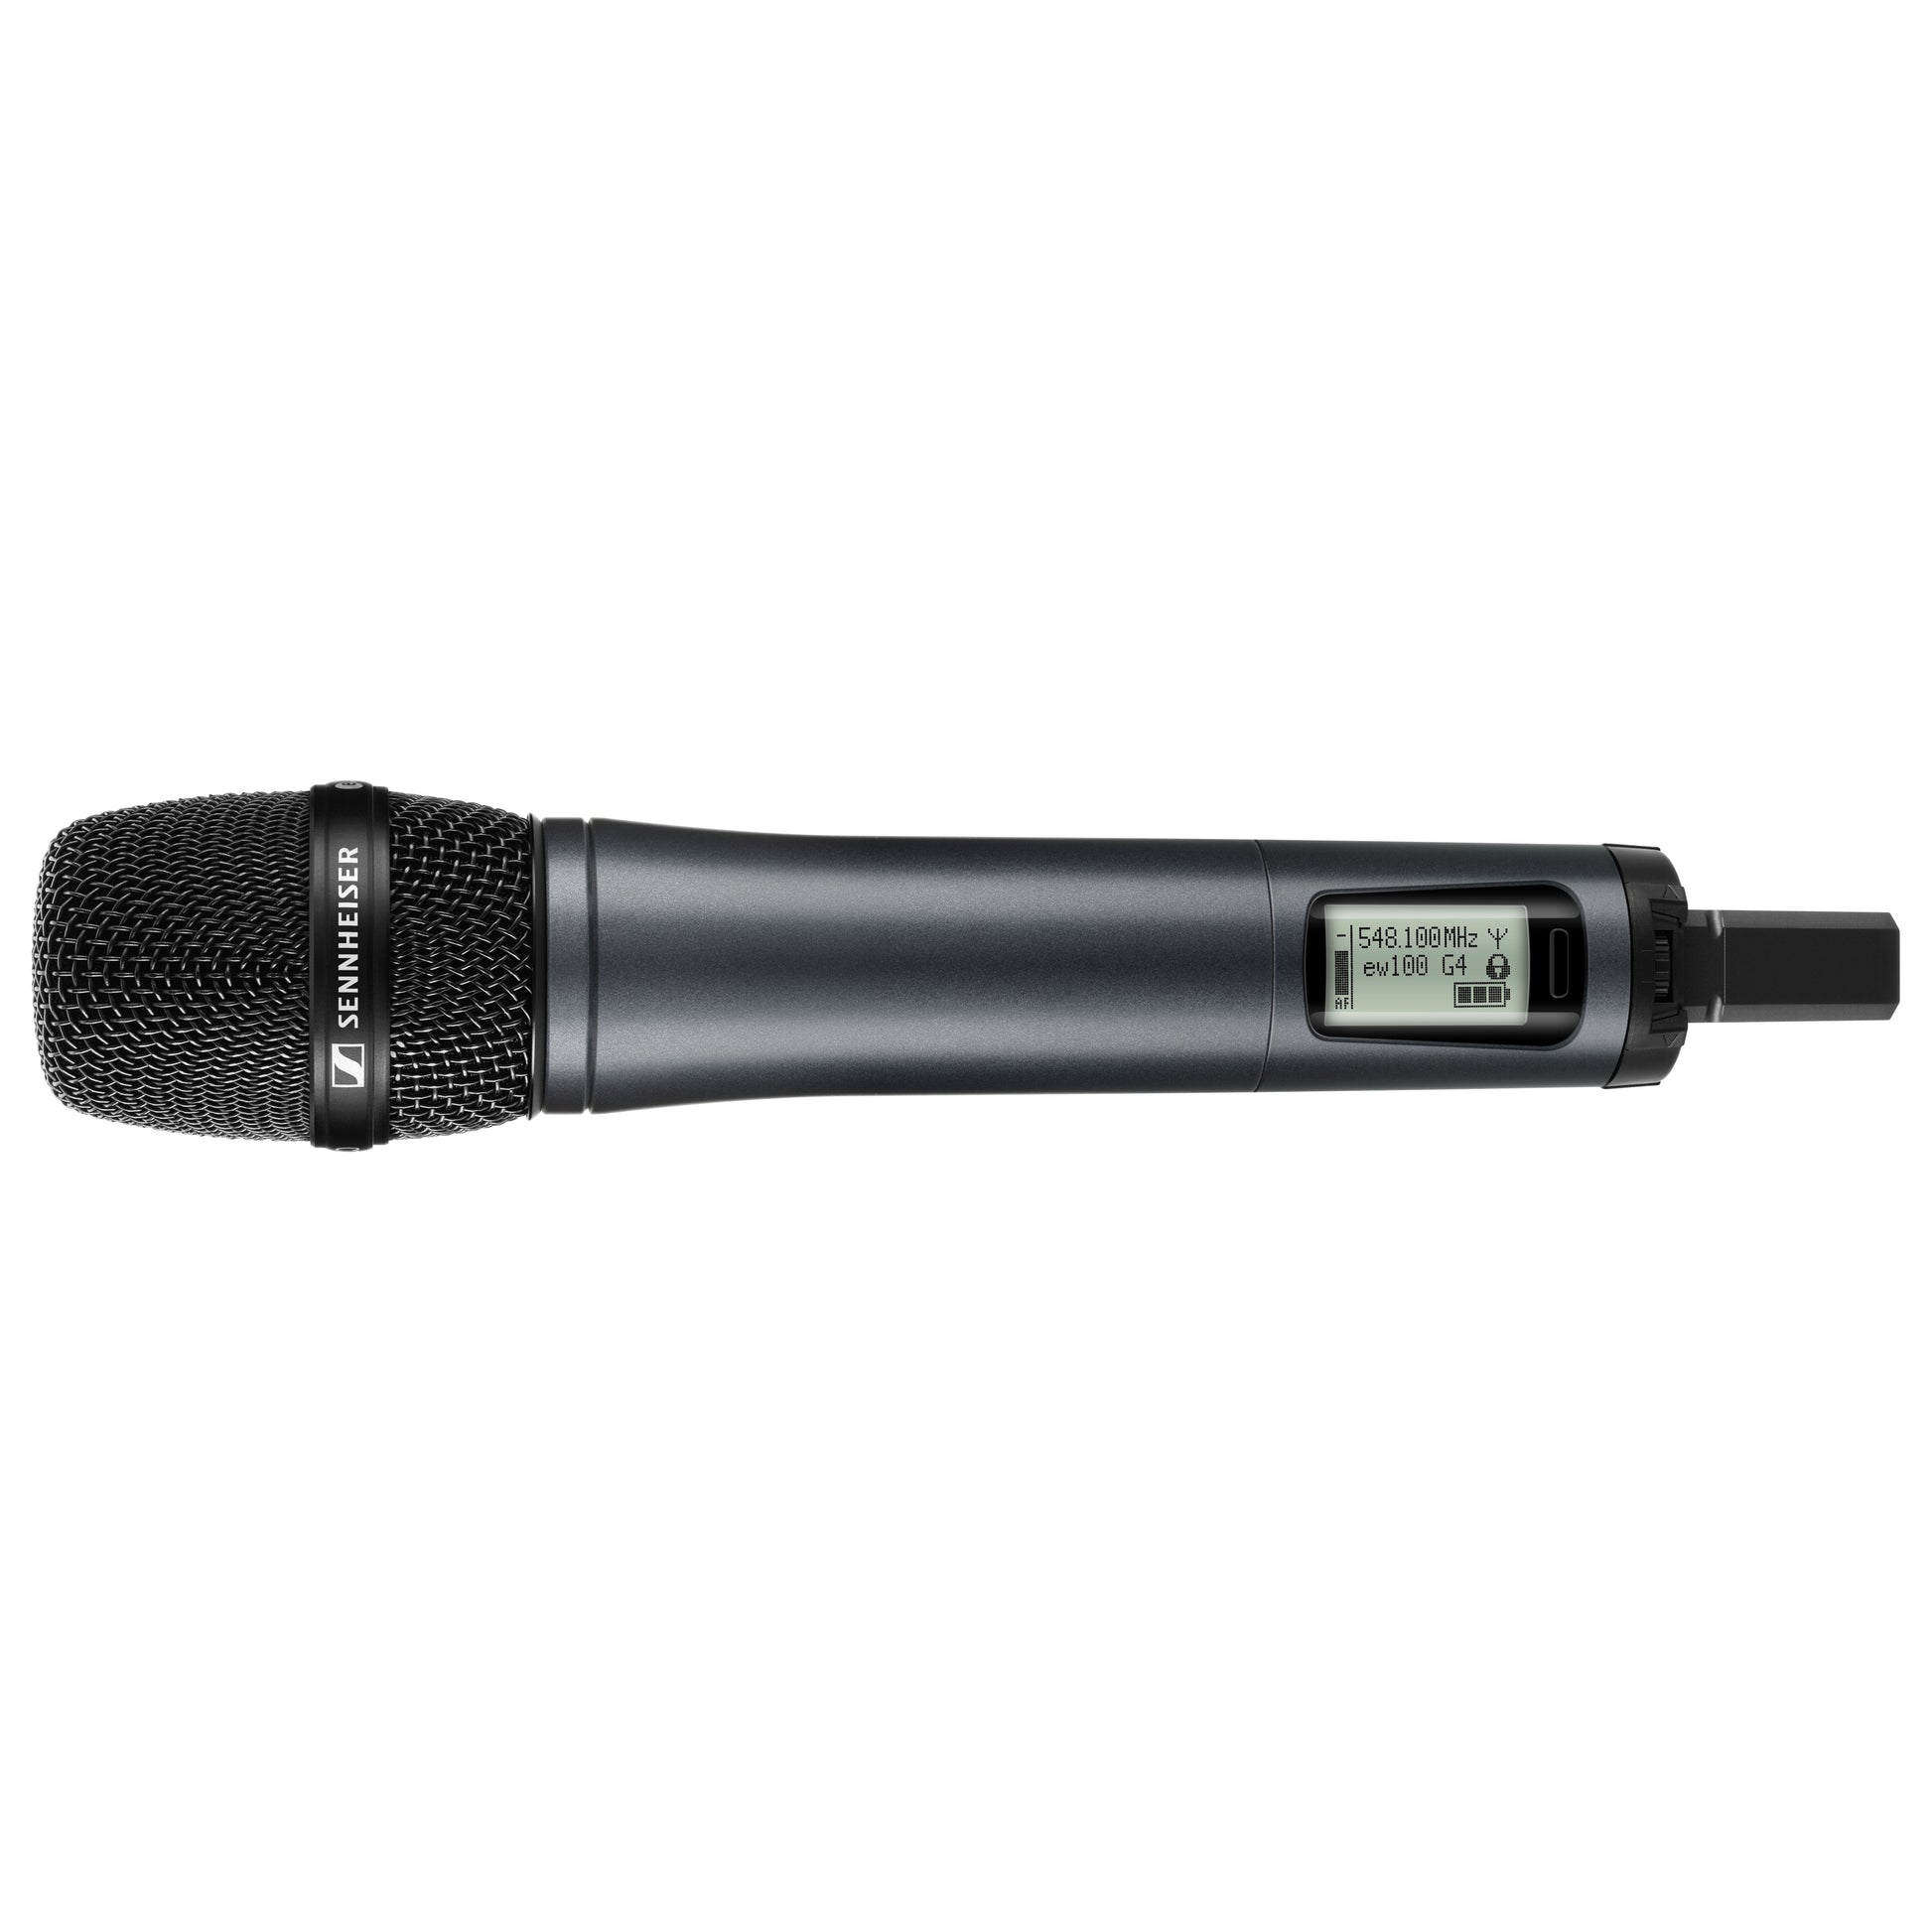 Sennheiser ew100 G4 e835 Vocal Wireless Microphone System, Band A (516-558 MHz)